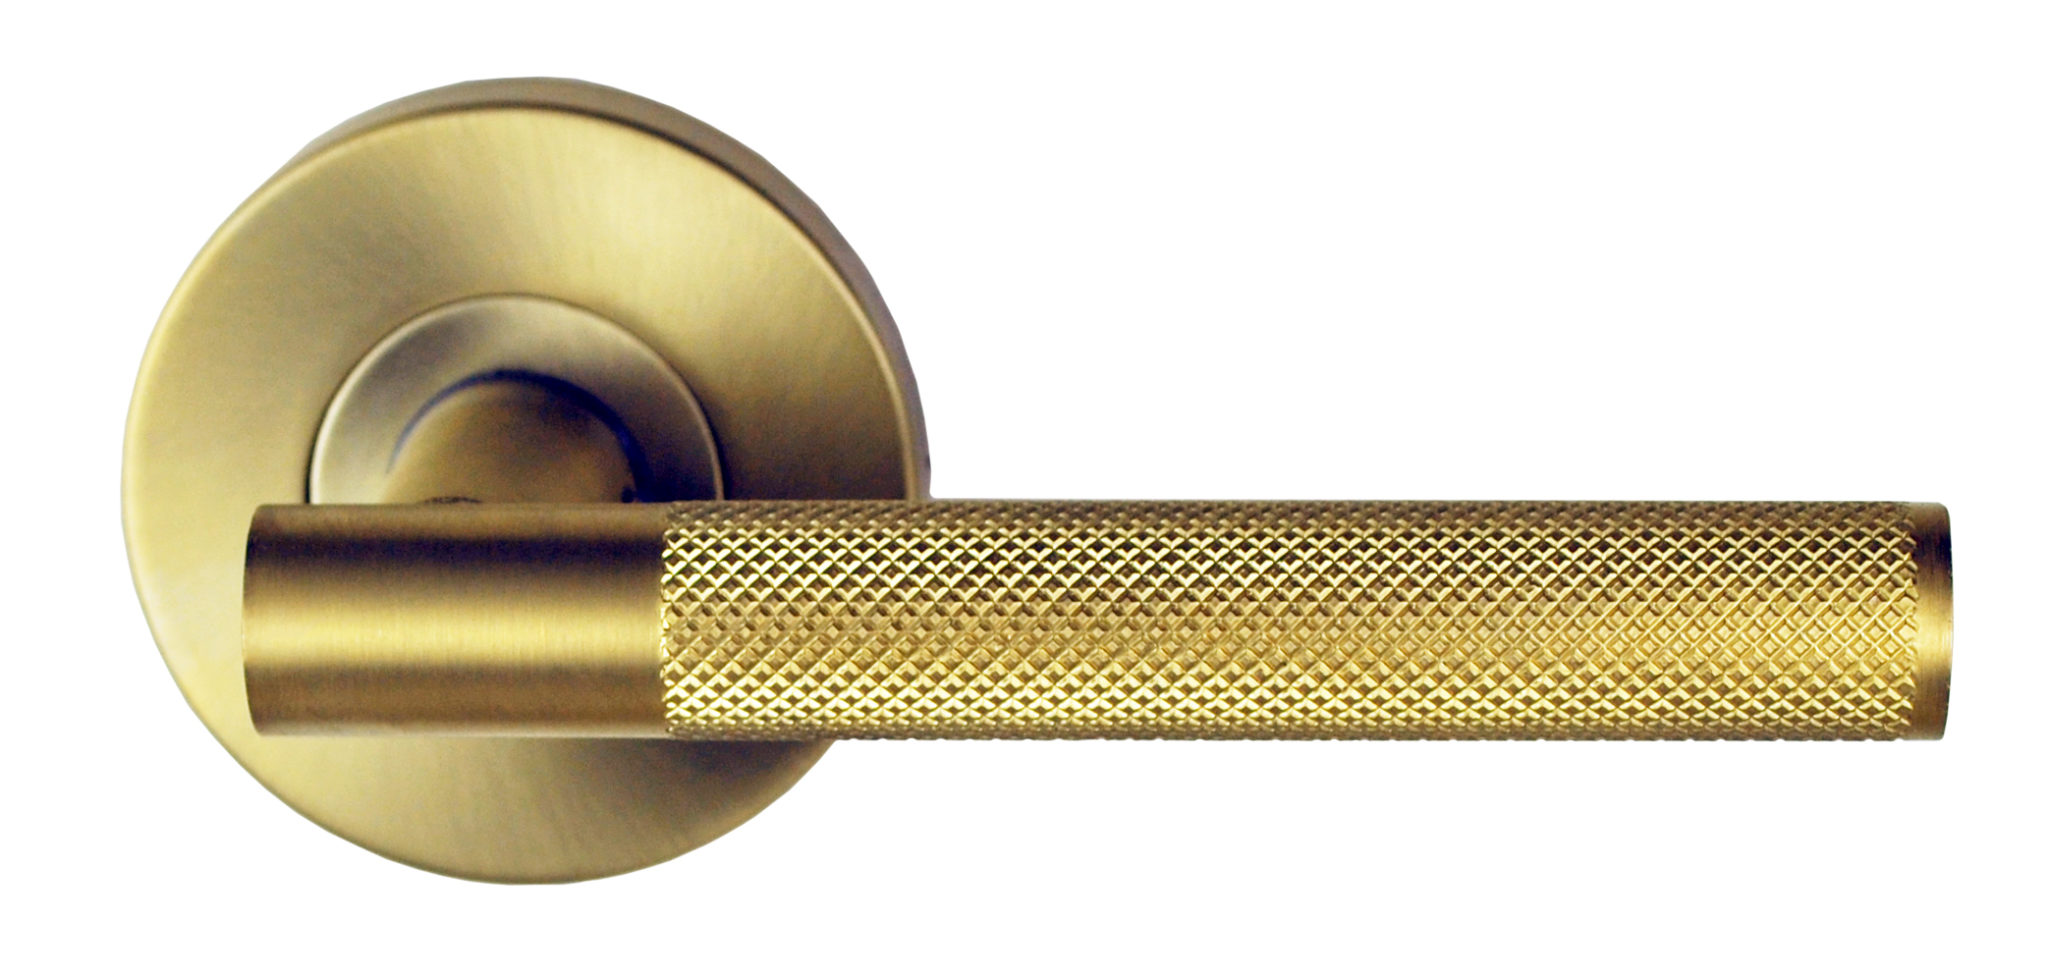 KIK Leather Door Handle | Natural/Brushed Brass